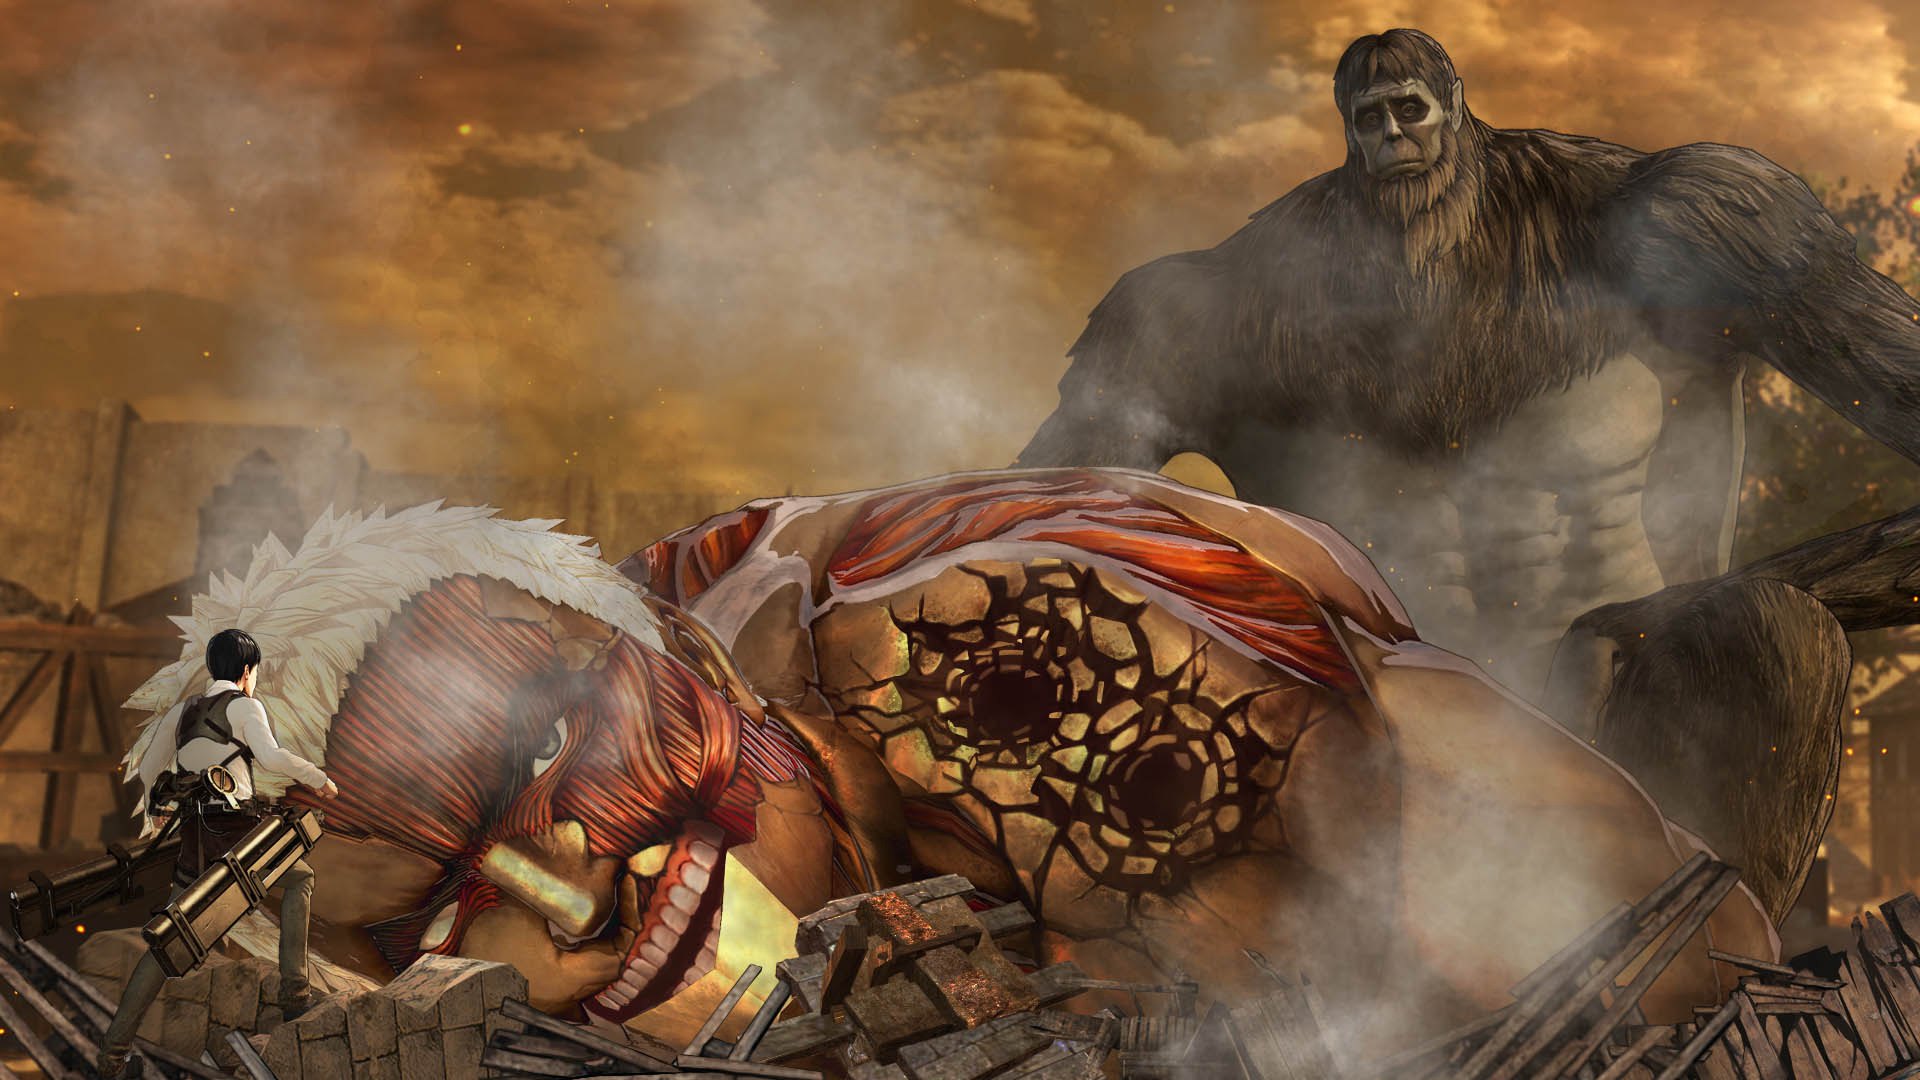 Attack On Titan 2 - Final Battle Upgrade Pack DLC EU V2 Steam Altergift